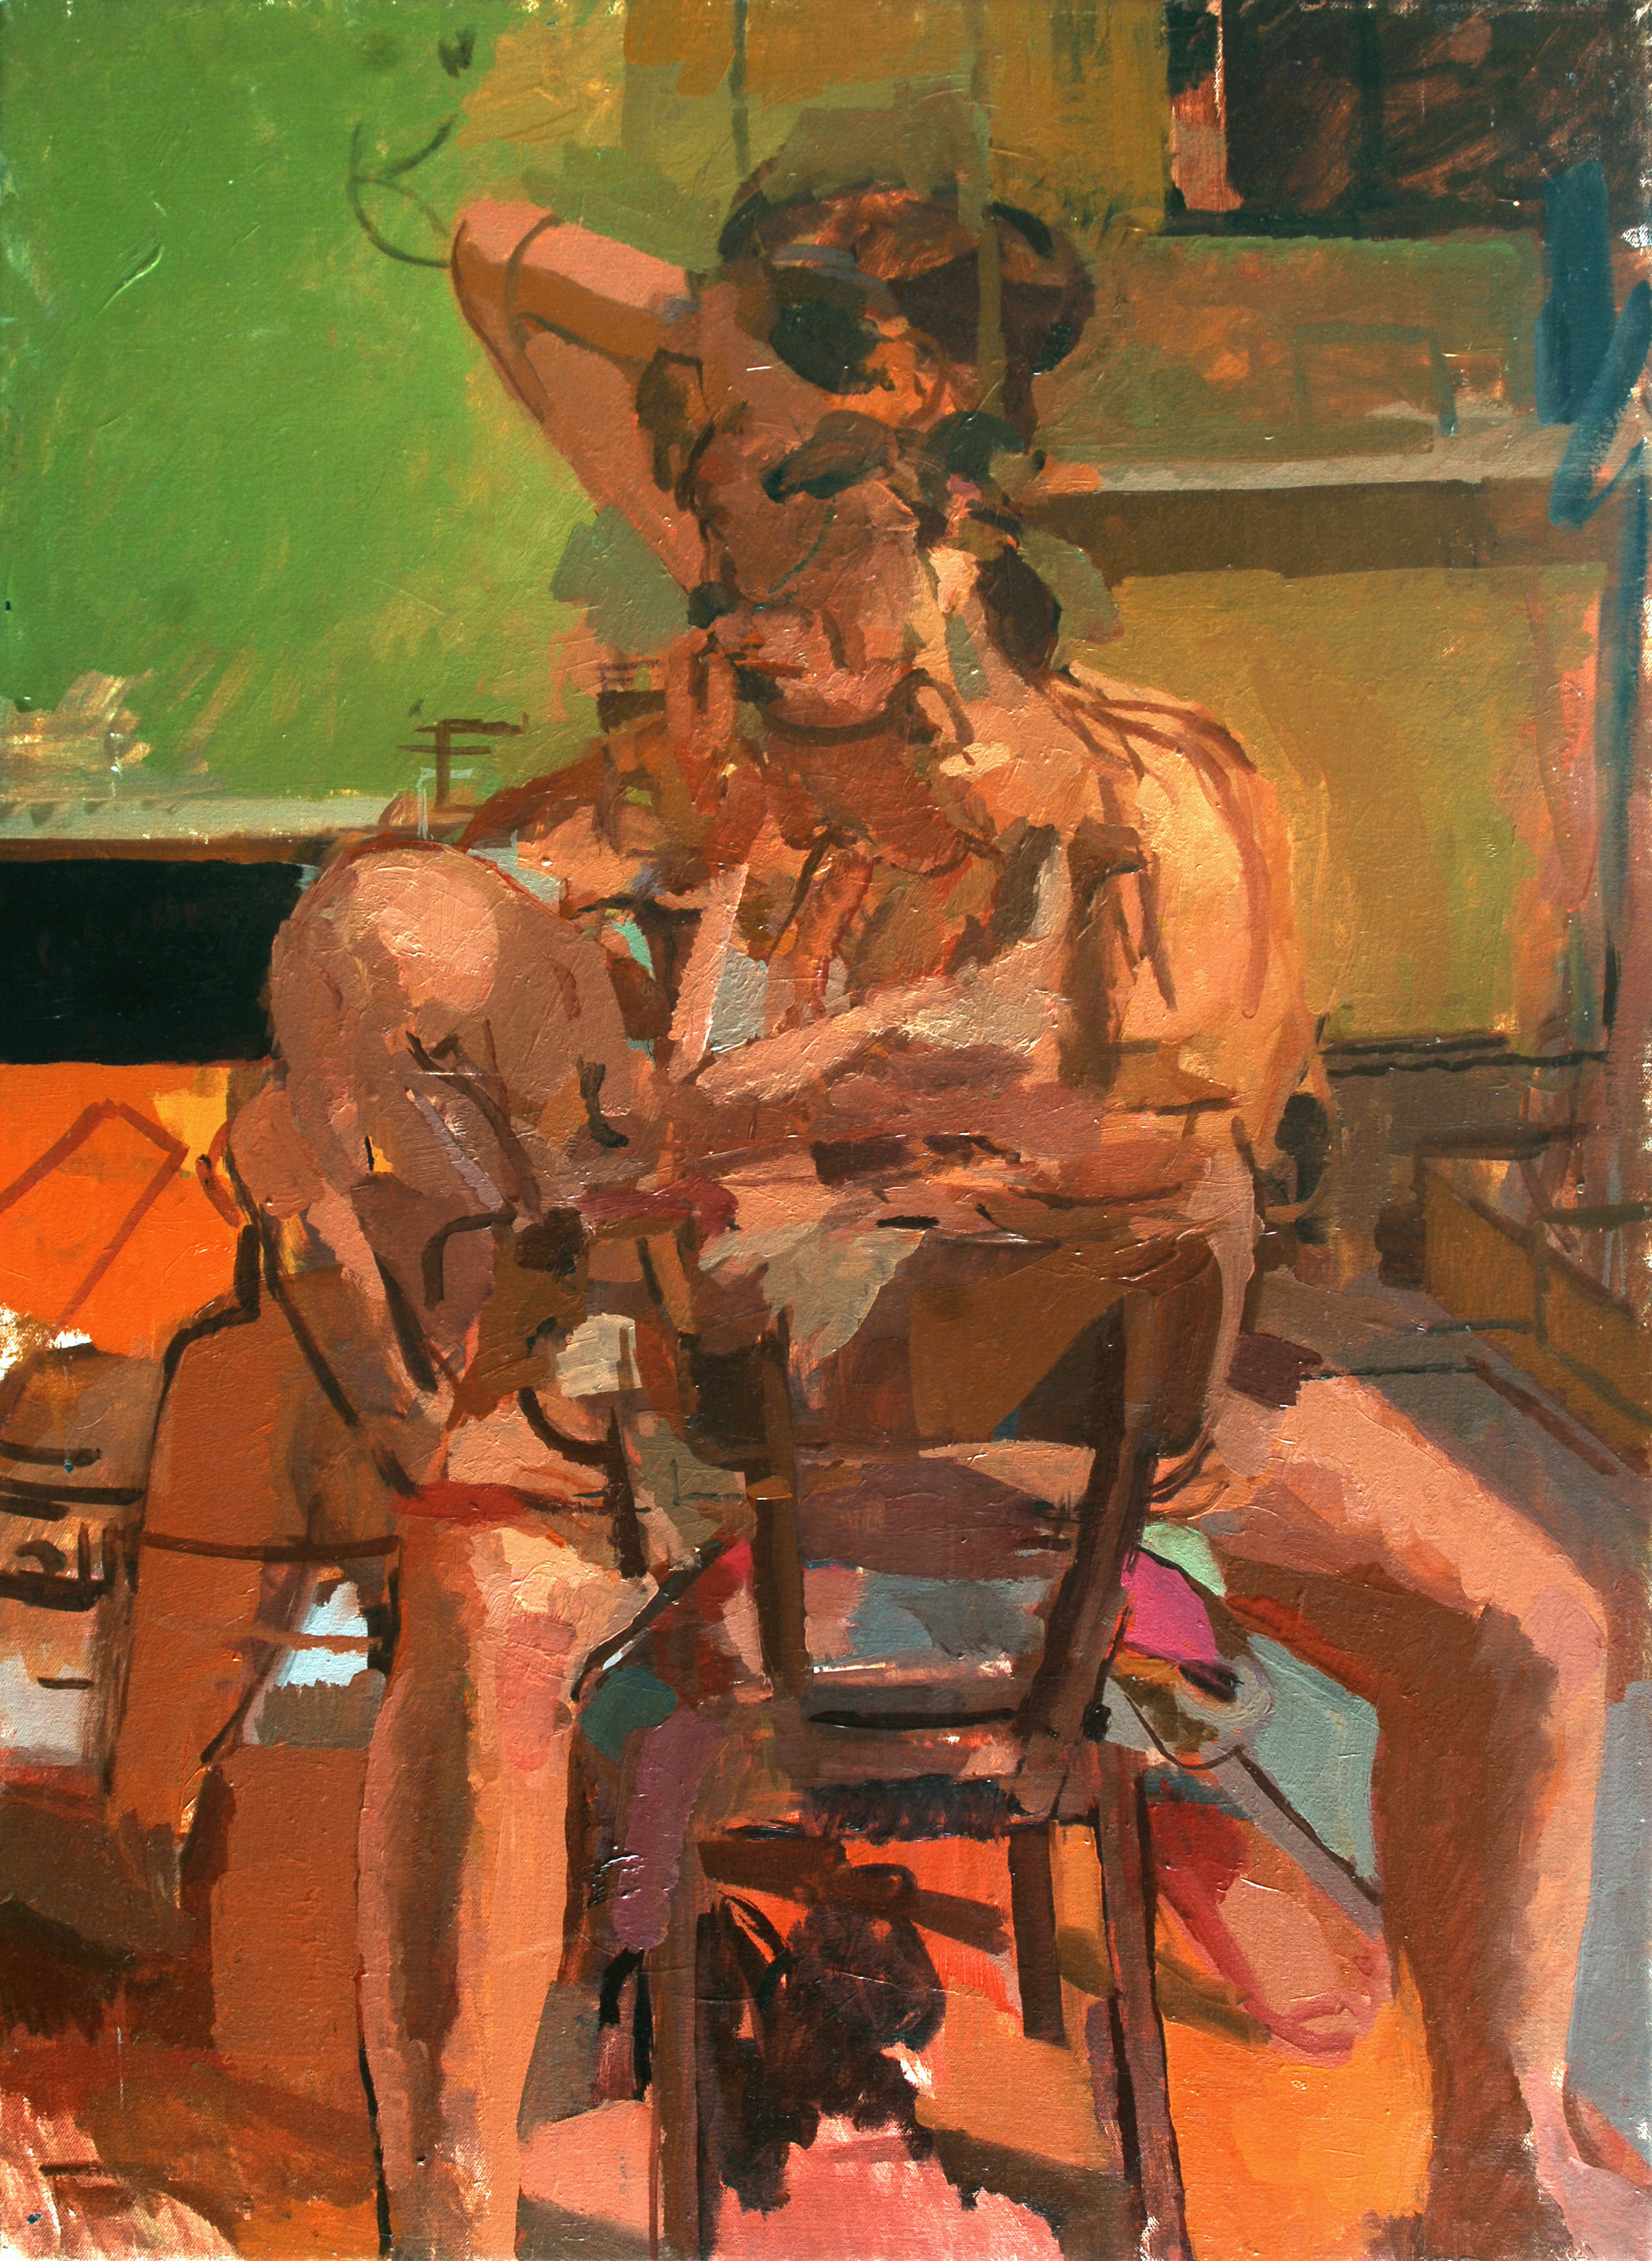    "Study"&nbsp;2009   Oil on canvas 